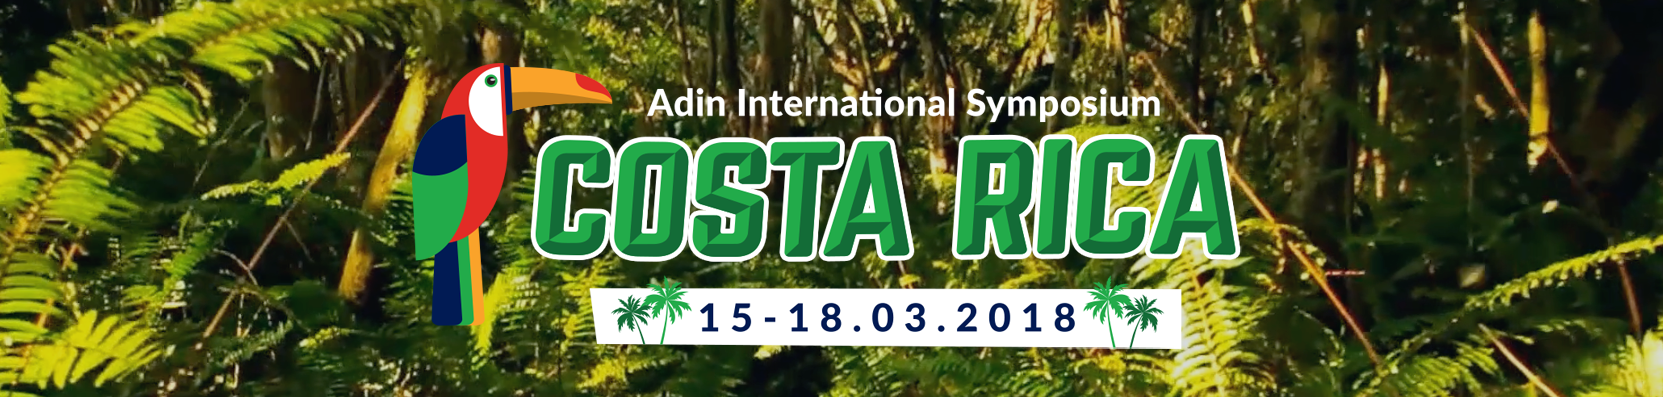 Adin international symposium costa Rica 2018